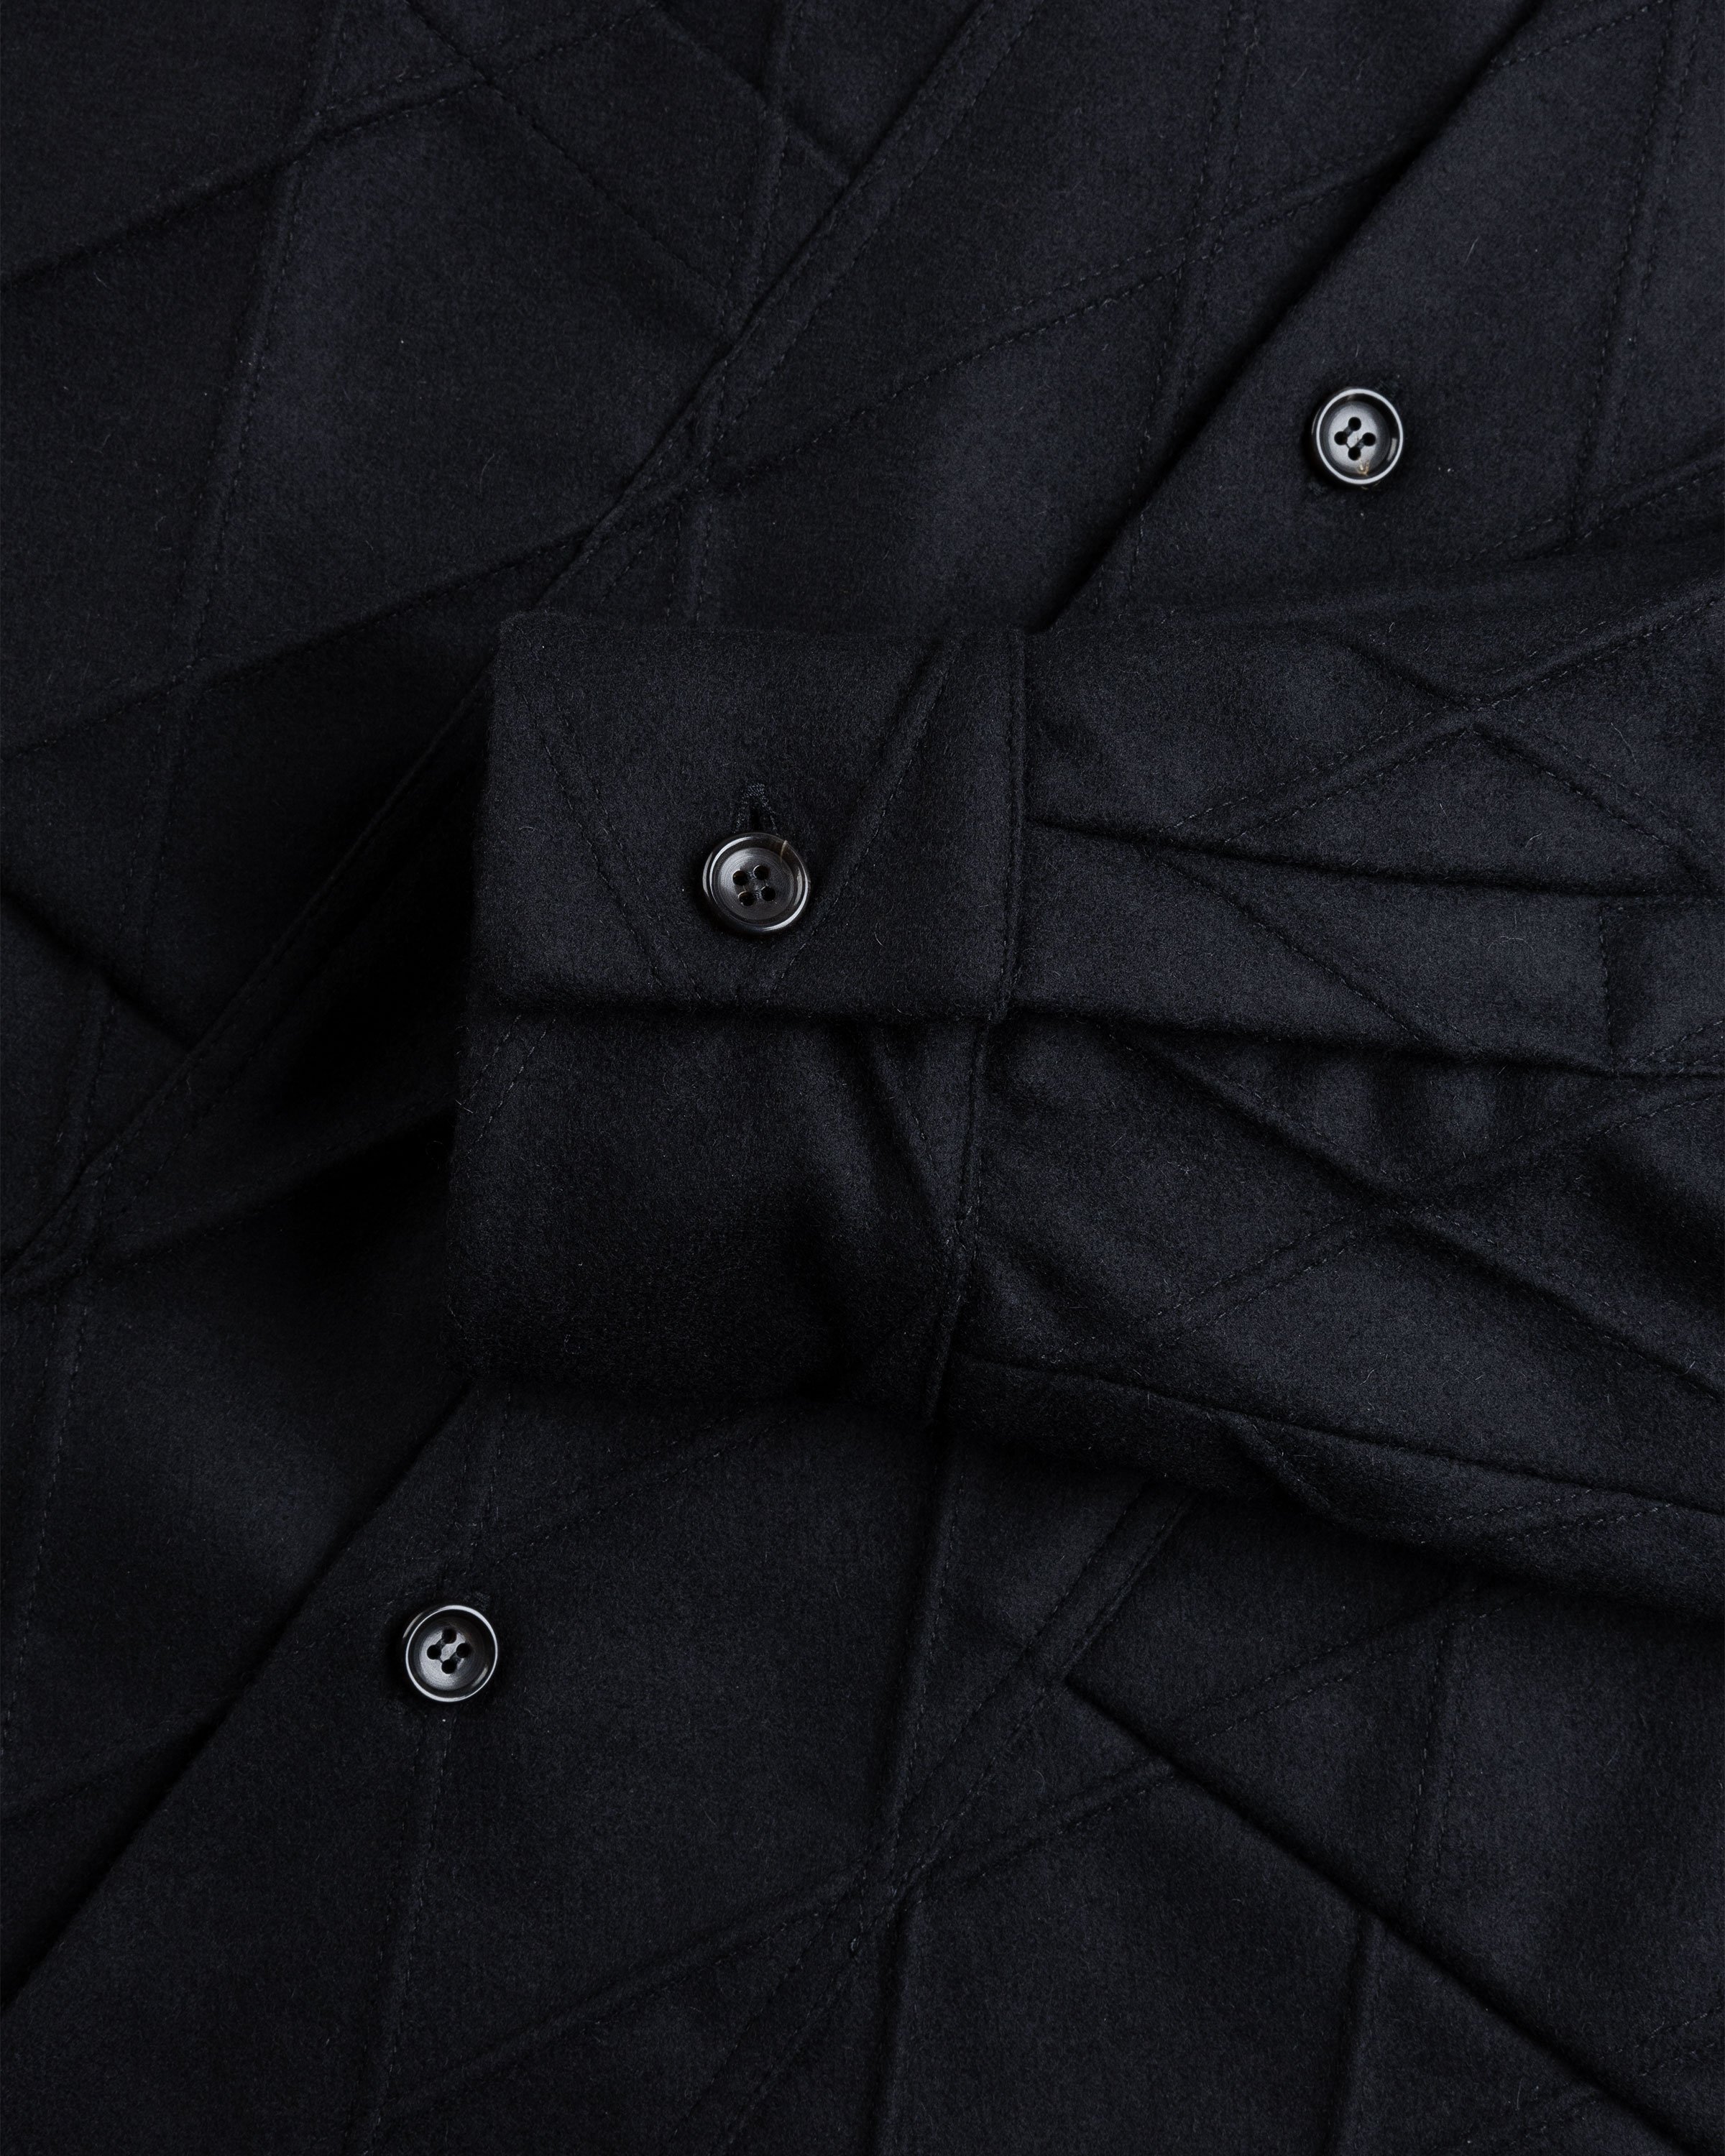 Winnie New York - SHIRT JACKET BLACK - Clothing - Black - Image 7